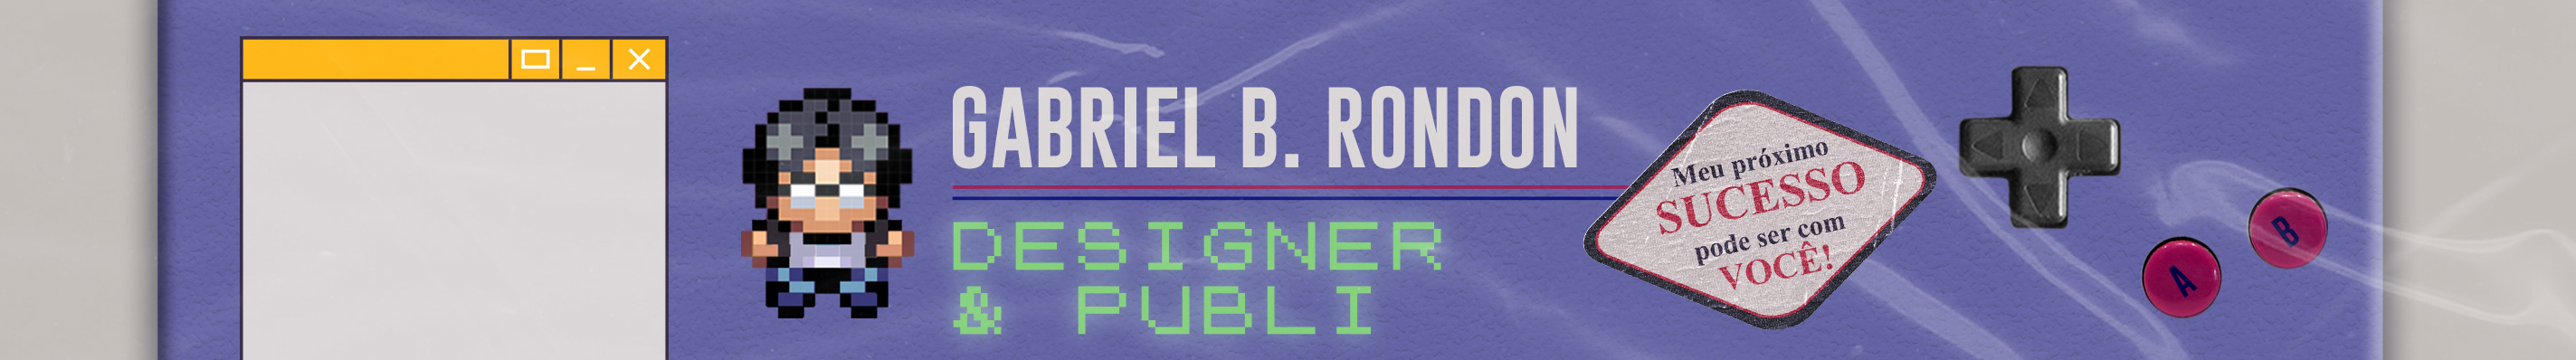 Baner profilu użytkownika Gabriel Rondon